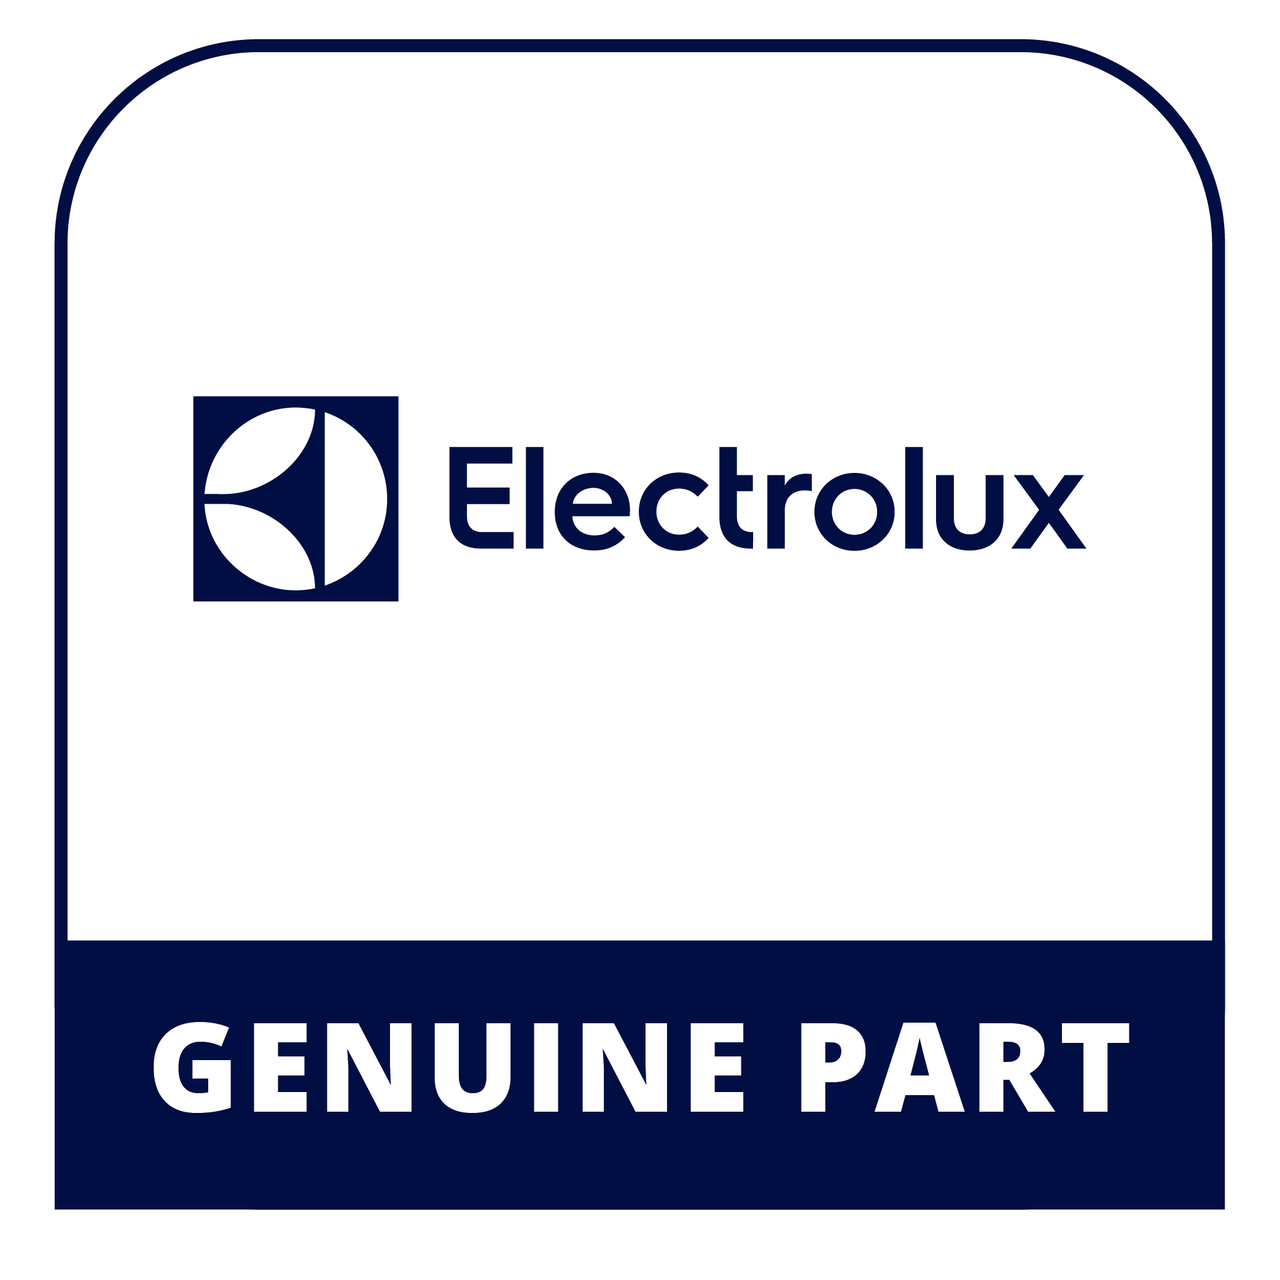 Frigidaire - Electrolux 316572700 - Nameplate - Genuine Electrolux Part